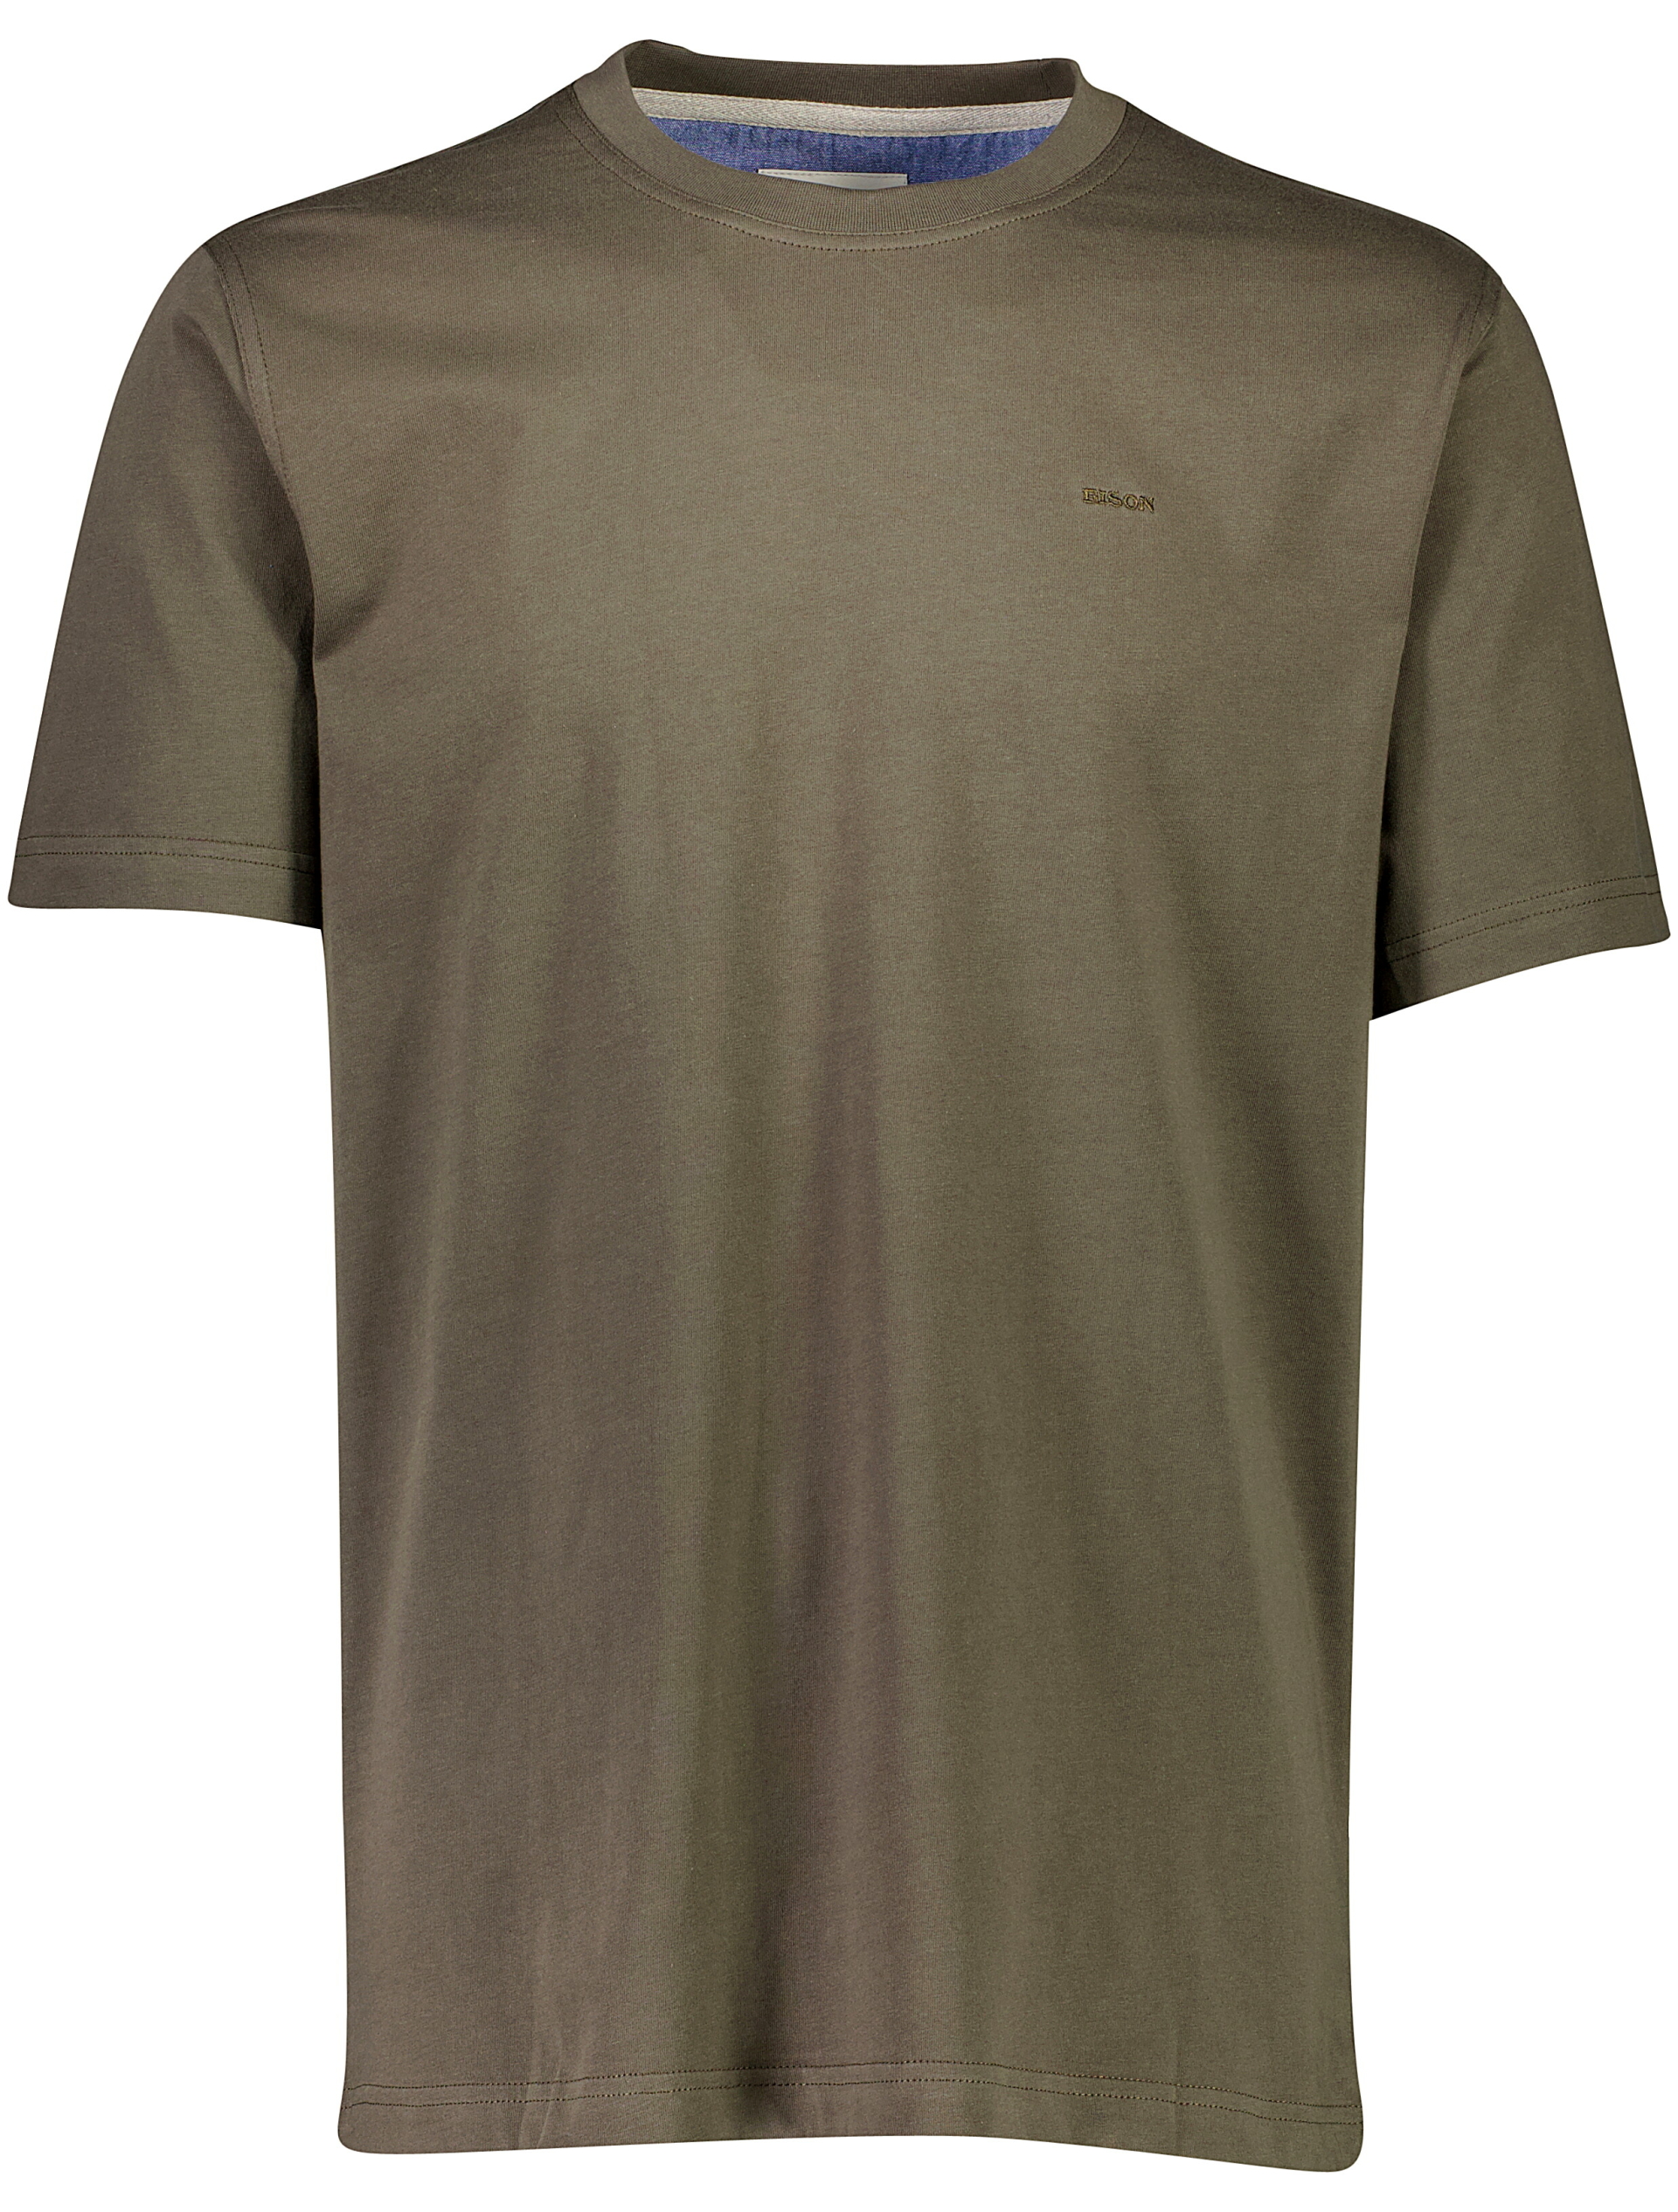 Bison T-shirt grøn / army grey